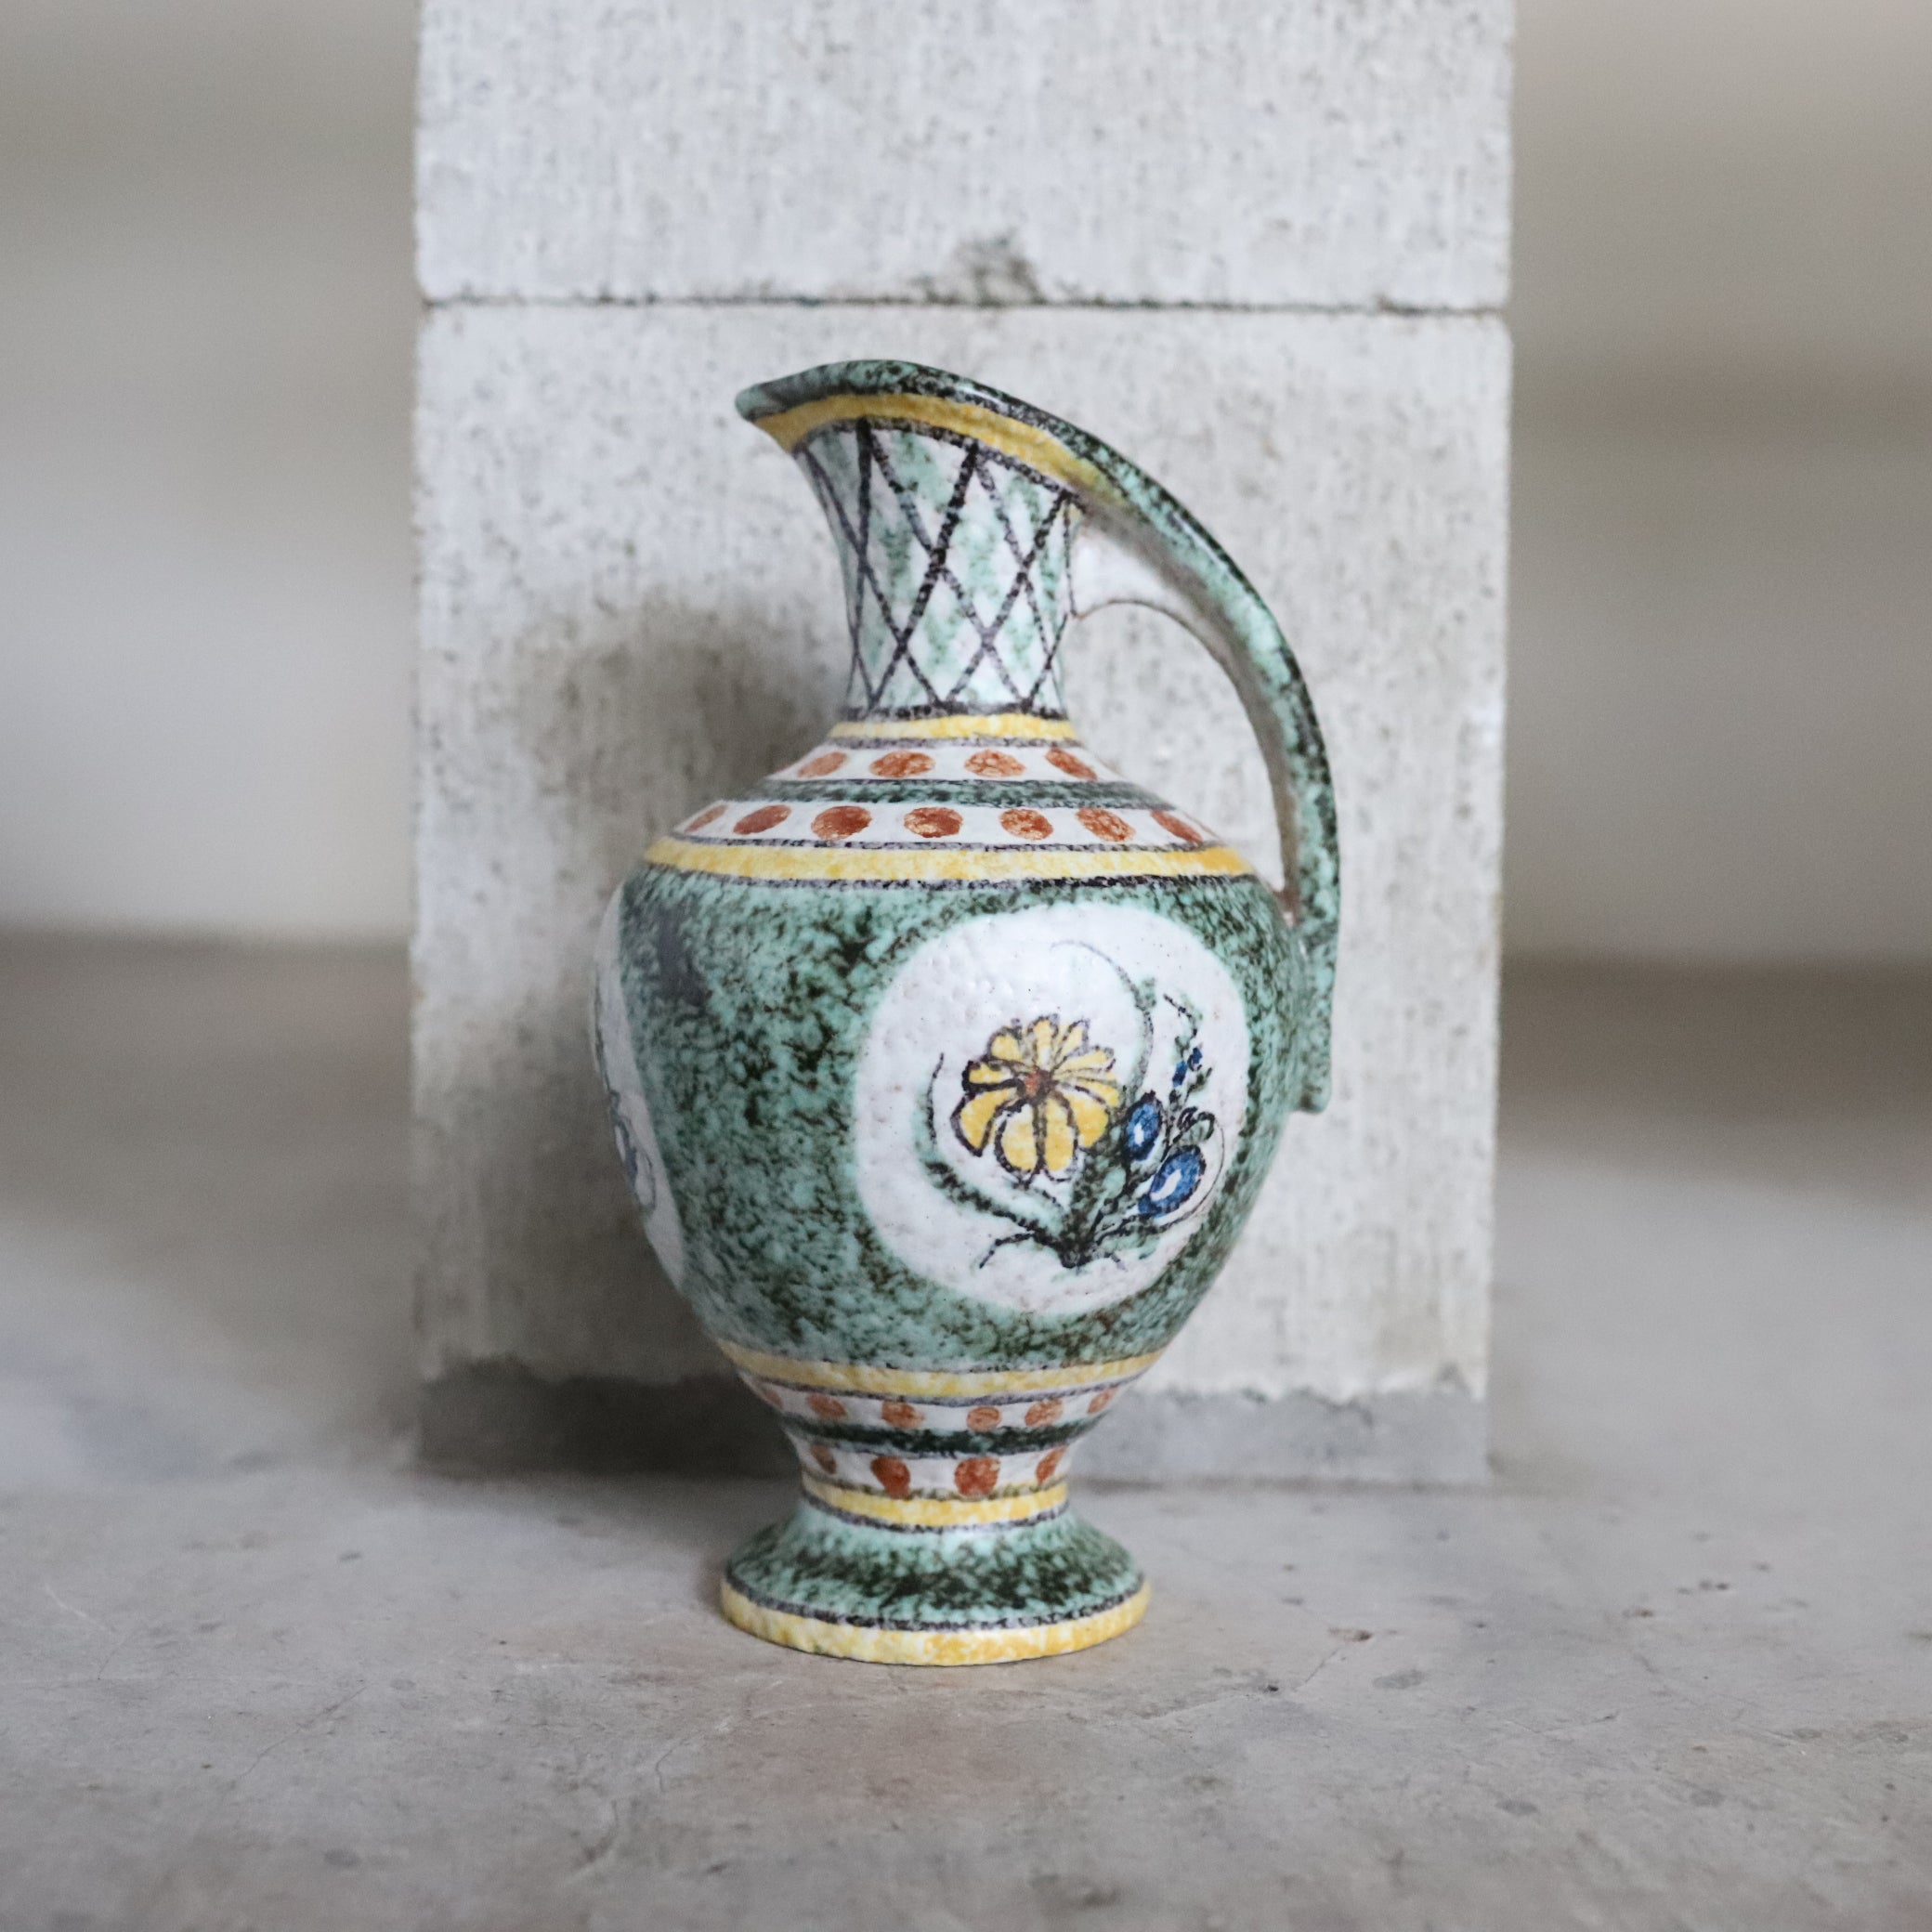 July Vase #8